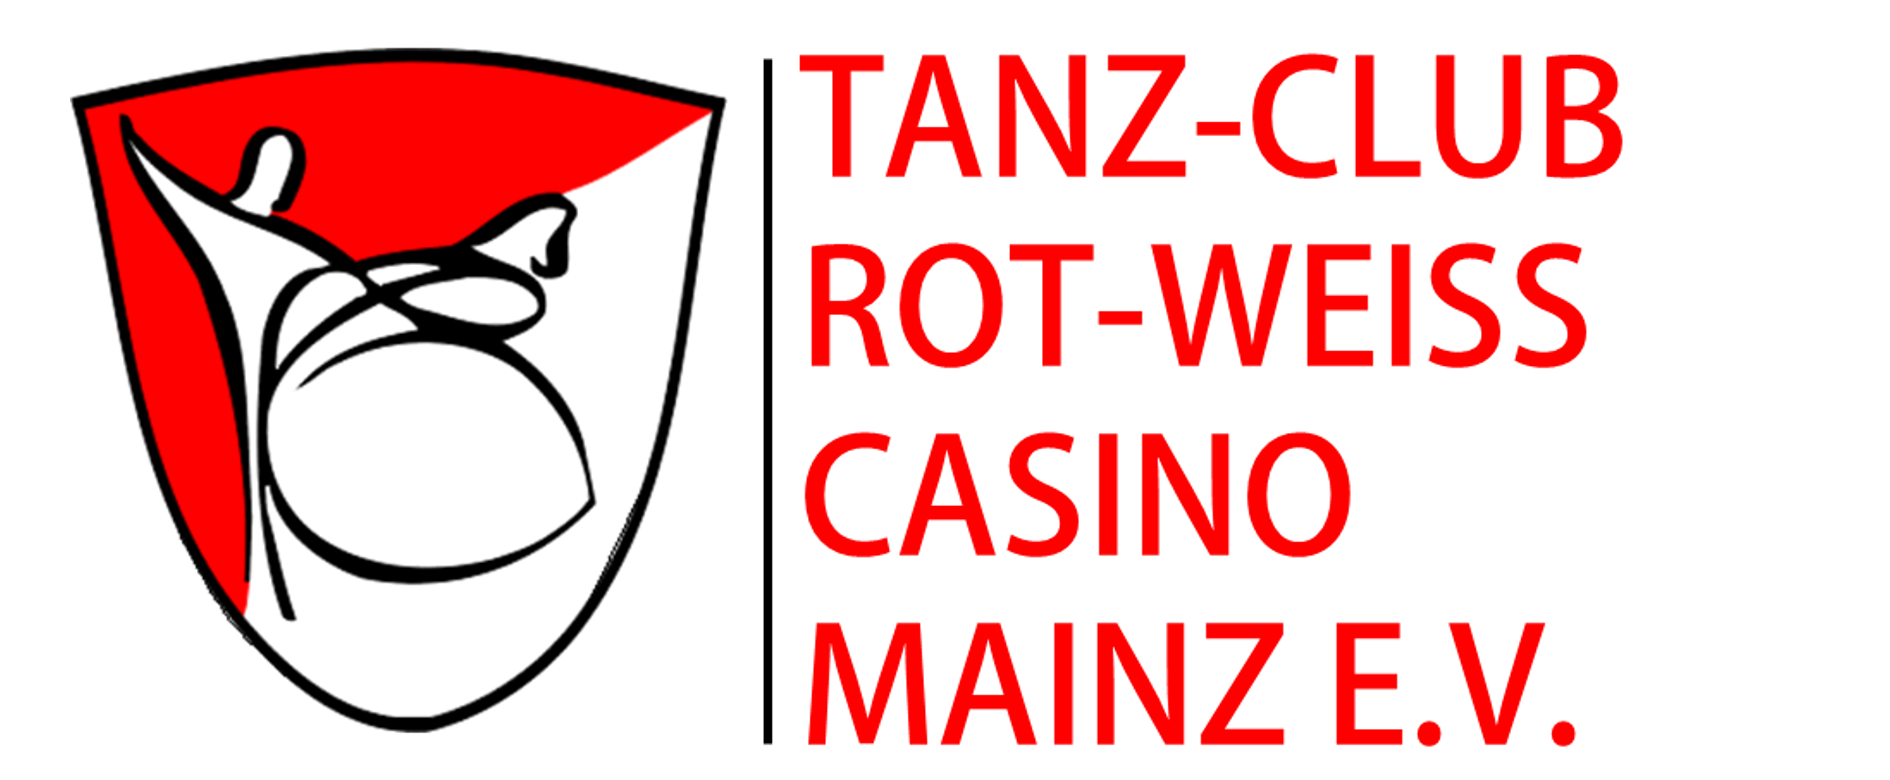 Tanz-Club Rot-Weiss Casino Mainz - Sportshop Logo